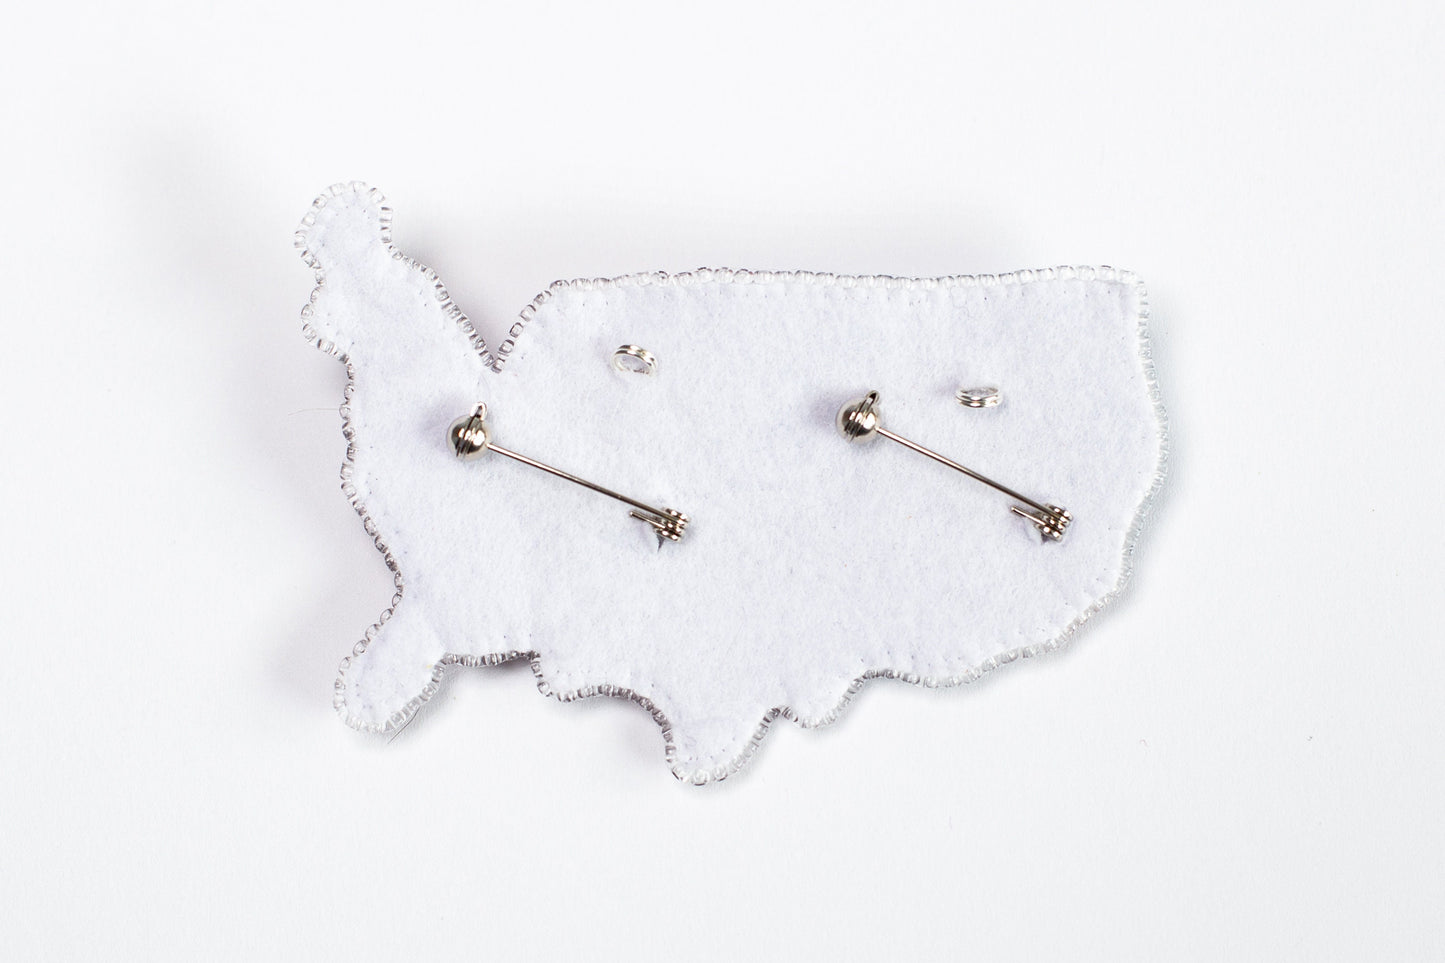 USA Map Bead embroidery kit. Seed Bead Brooch kit. DIY Craft kit. Beadweaving Kit. Needlework beading. Handmade Jewelry Making Kit